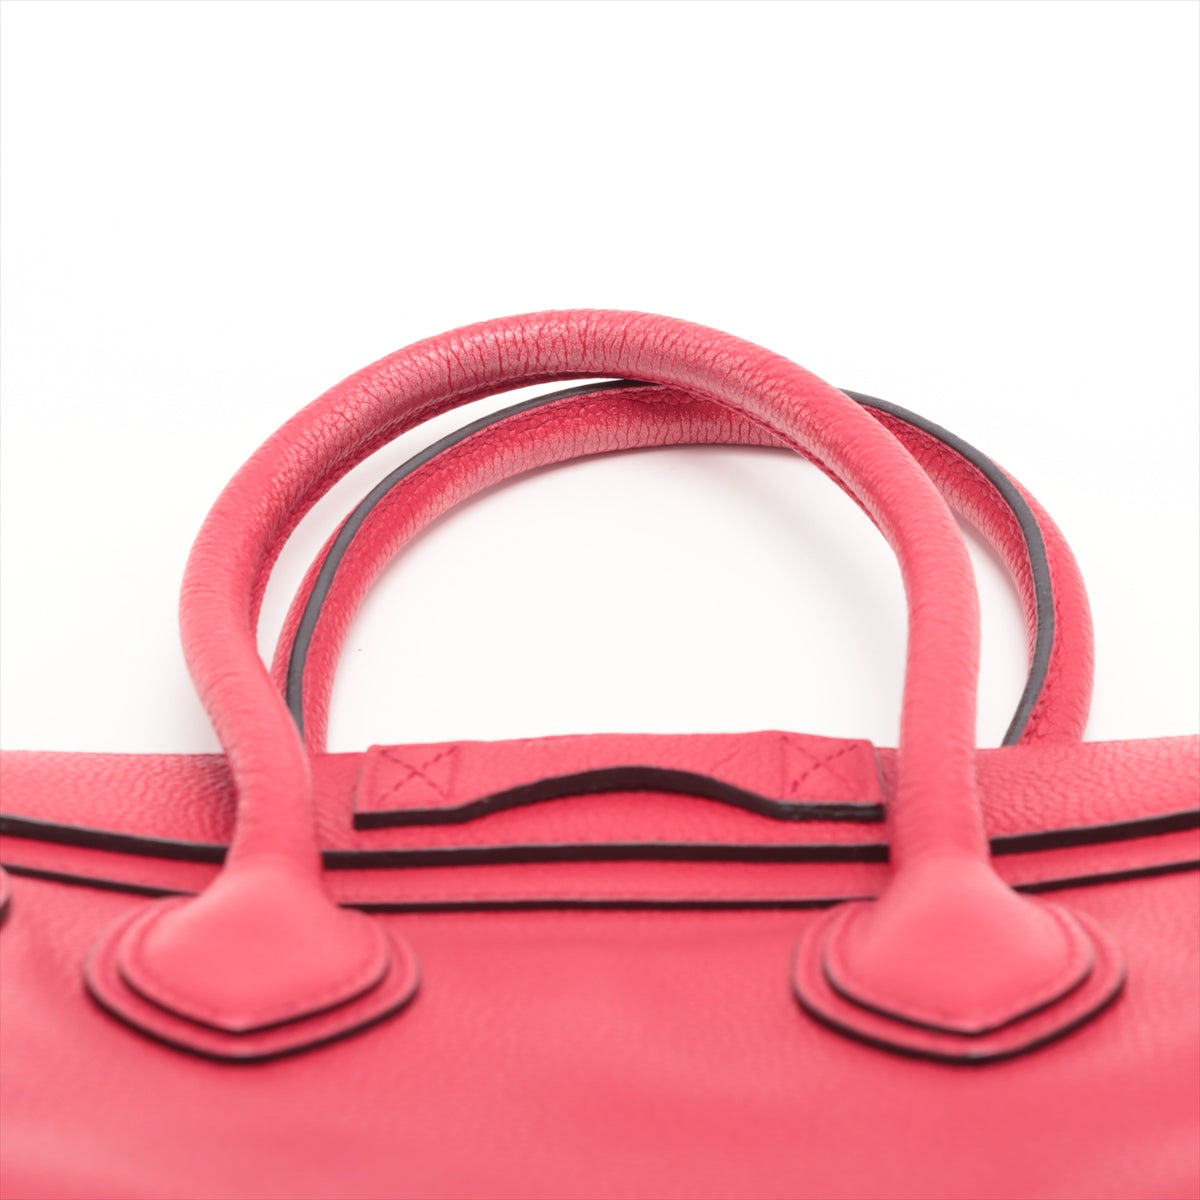 Celine Luggage Micro  Handbag Red Lagoon